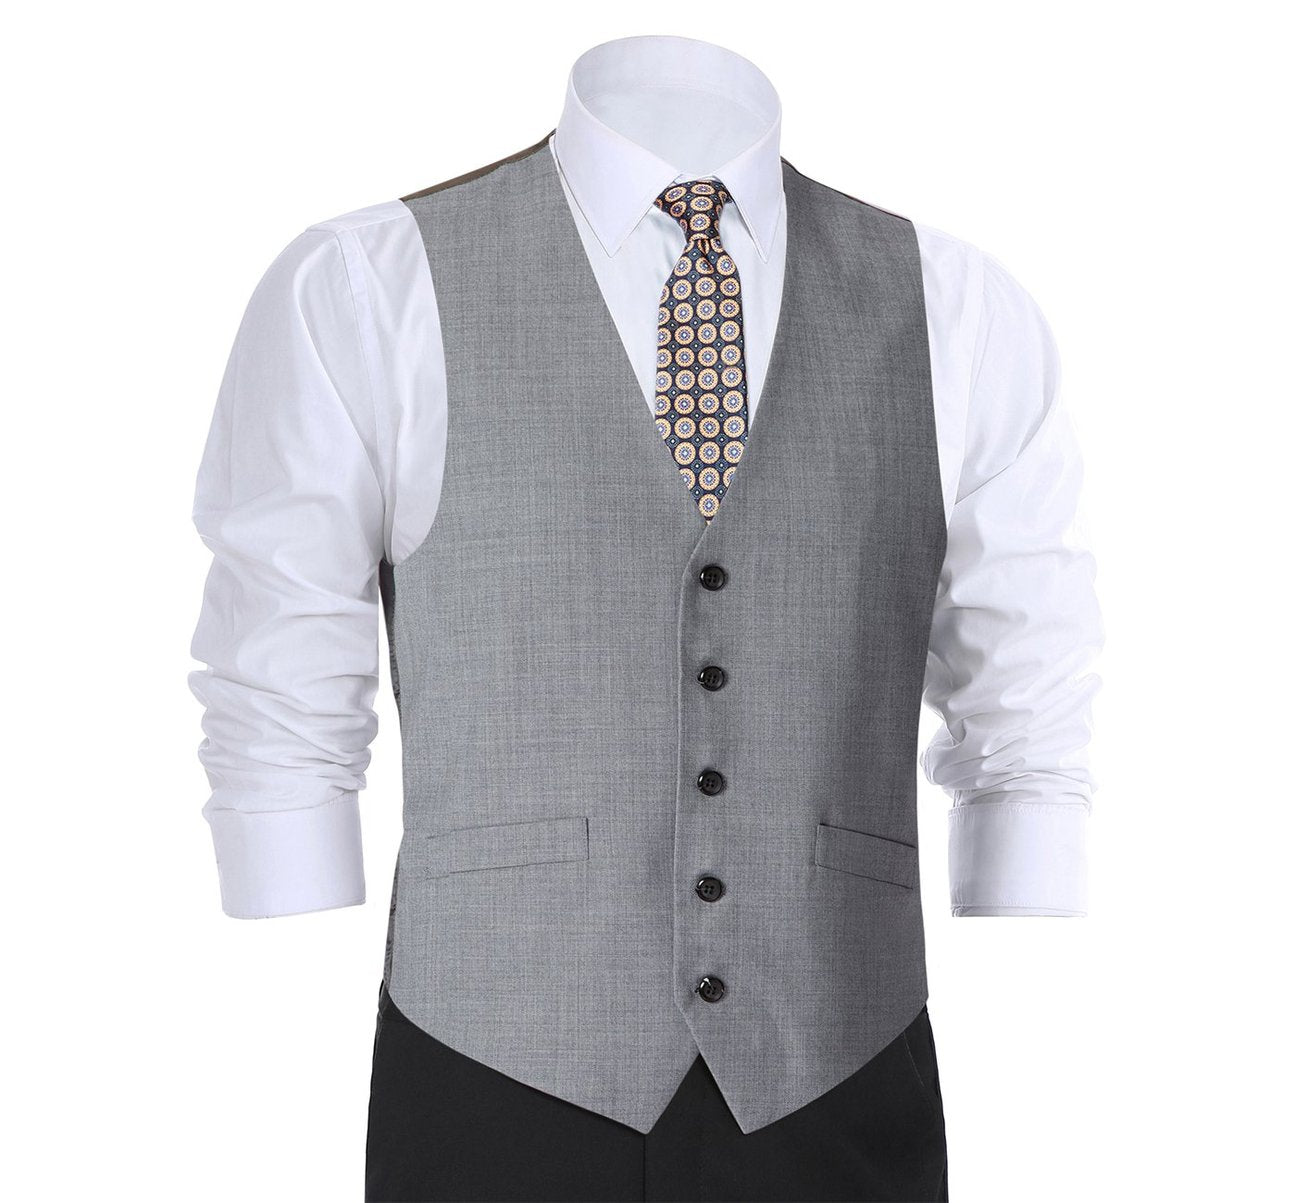 RENOIR Light Grey Wool Suit Vest Regular Fit Dress Suit Waistcoat 508-5